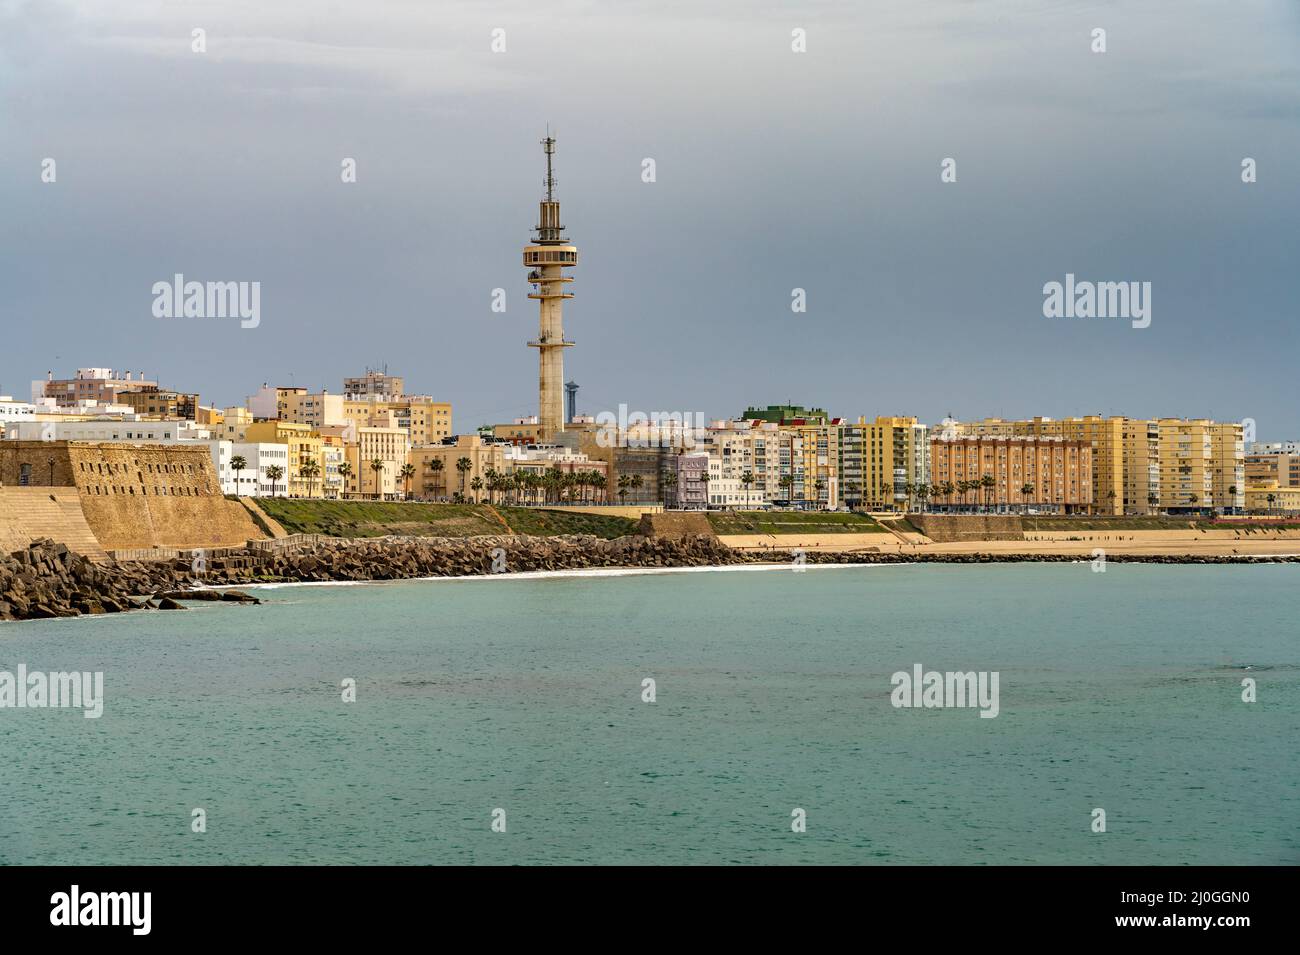 Die Küste mit dem Telekommunikations Turm La Torre Tavira II und dem Strand Playa de Santa María del Mar in Cádiz, Andalusien, Spanien  |  The coast w Stock Photo